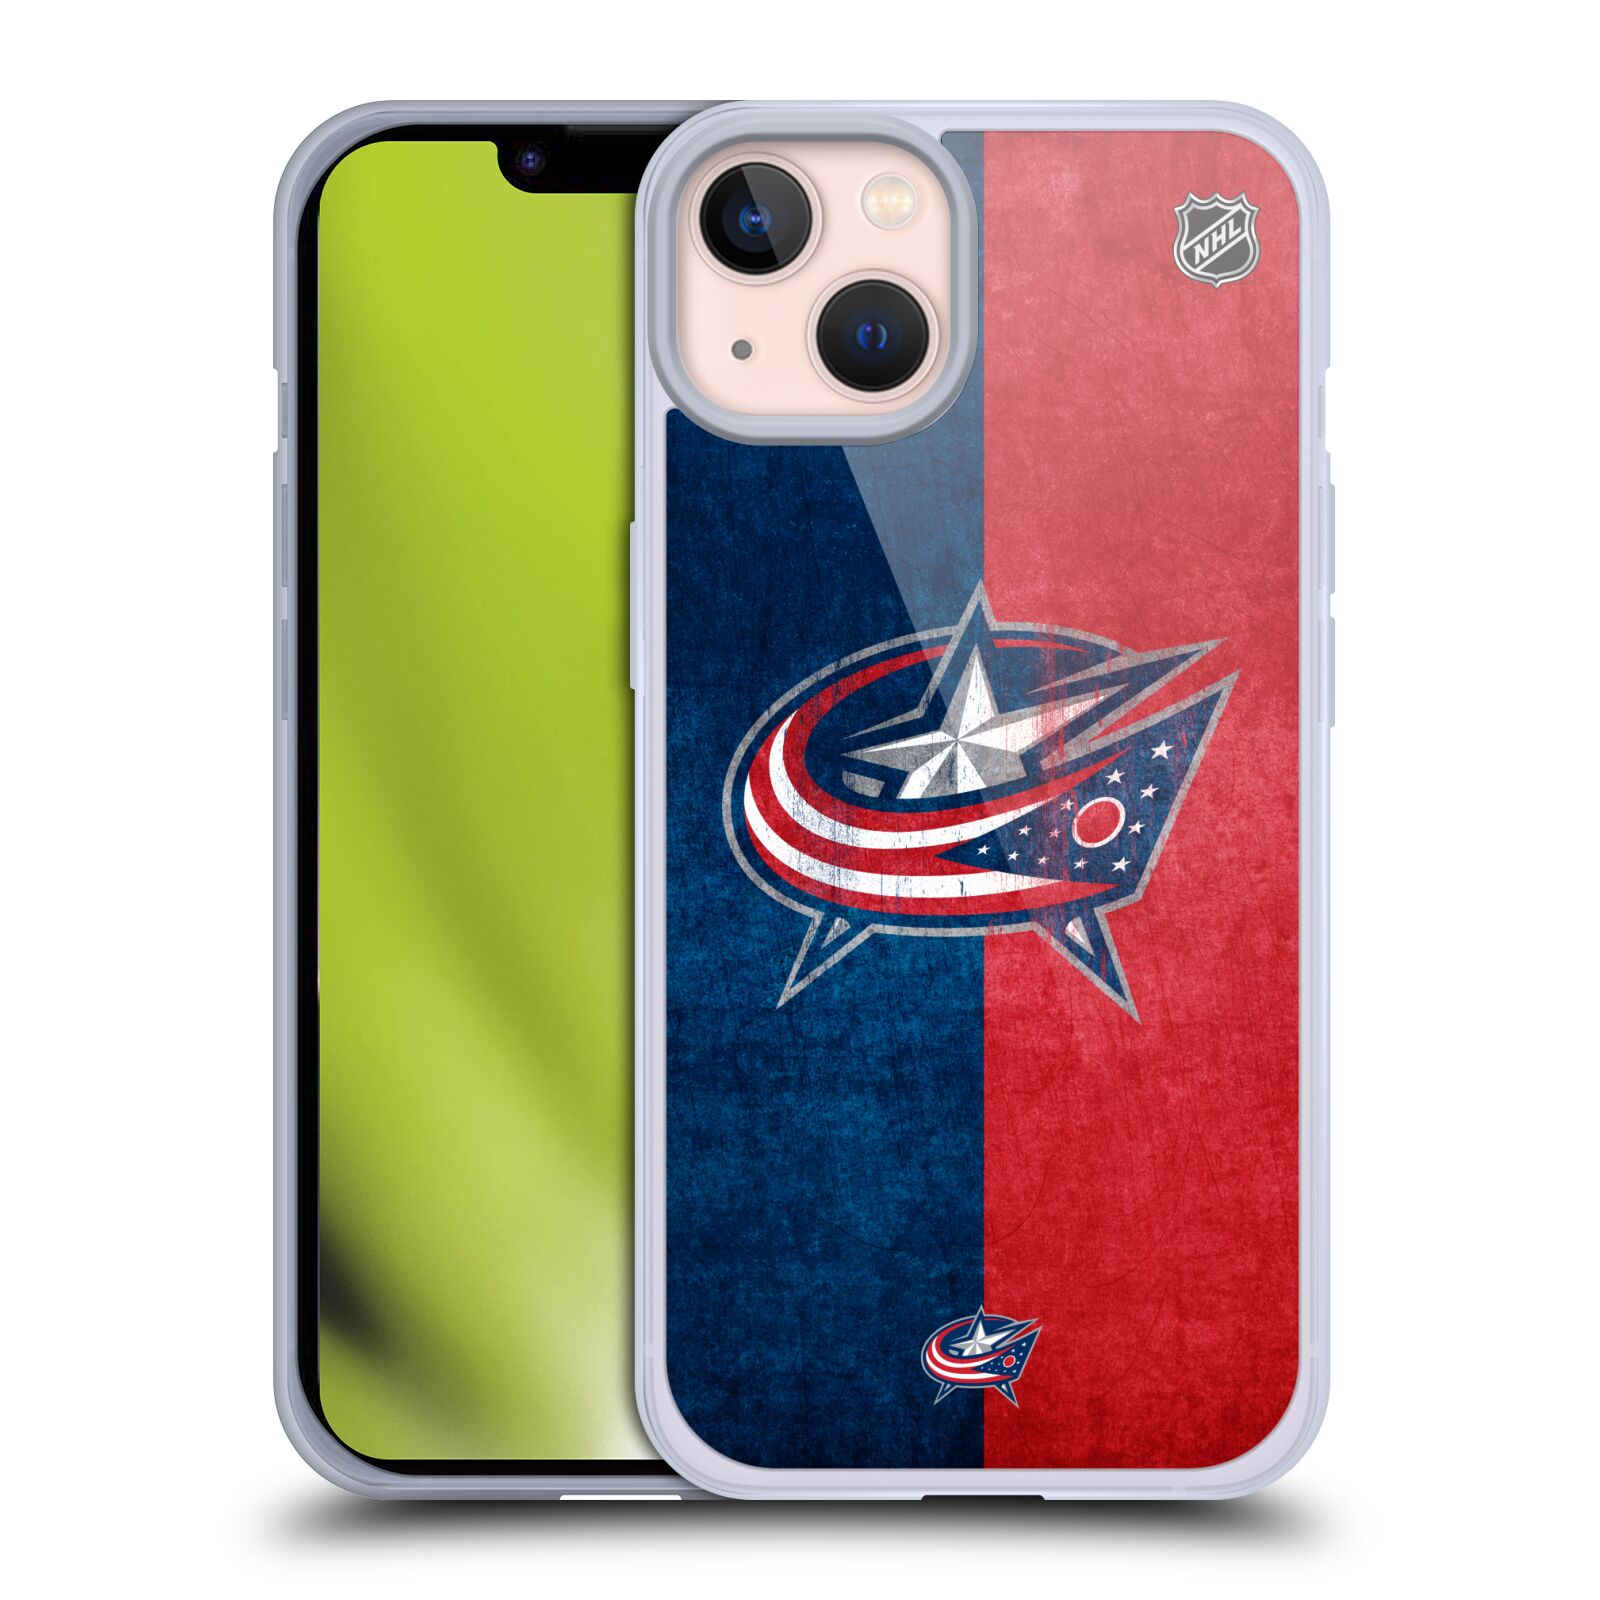 Silikonové pouzdro na mobil Apple iPhone 13 - NHL - Půlené logo Columbus Blue Jackets (Silikonový kryt, obal, pouzdro na mobilní telefon Apple iPhone 13 s licencovaným motivem NHL - Půlené logo Columbus Blue Jackets)